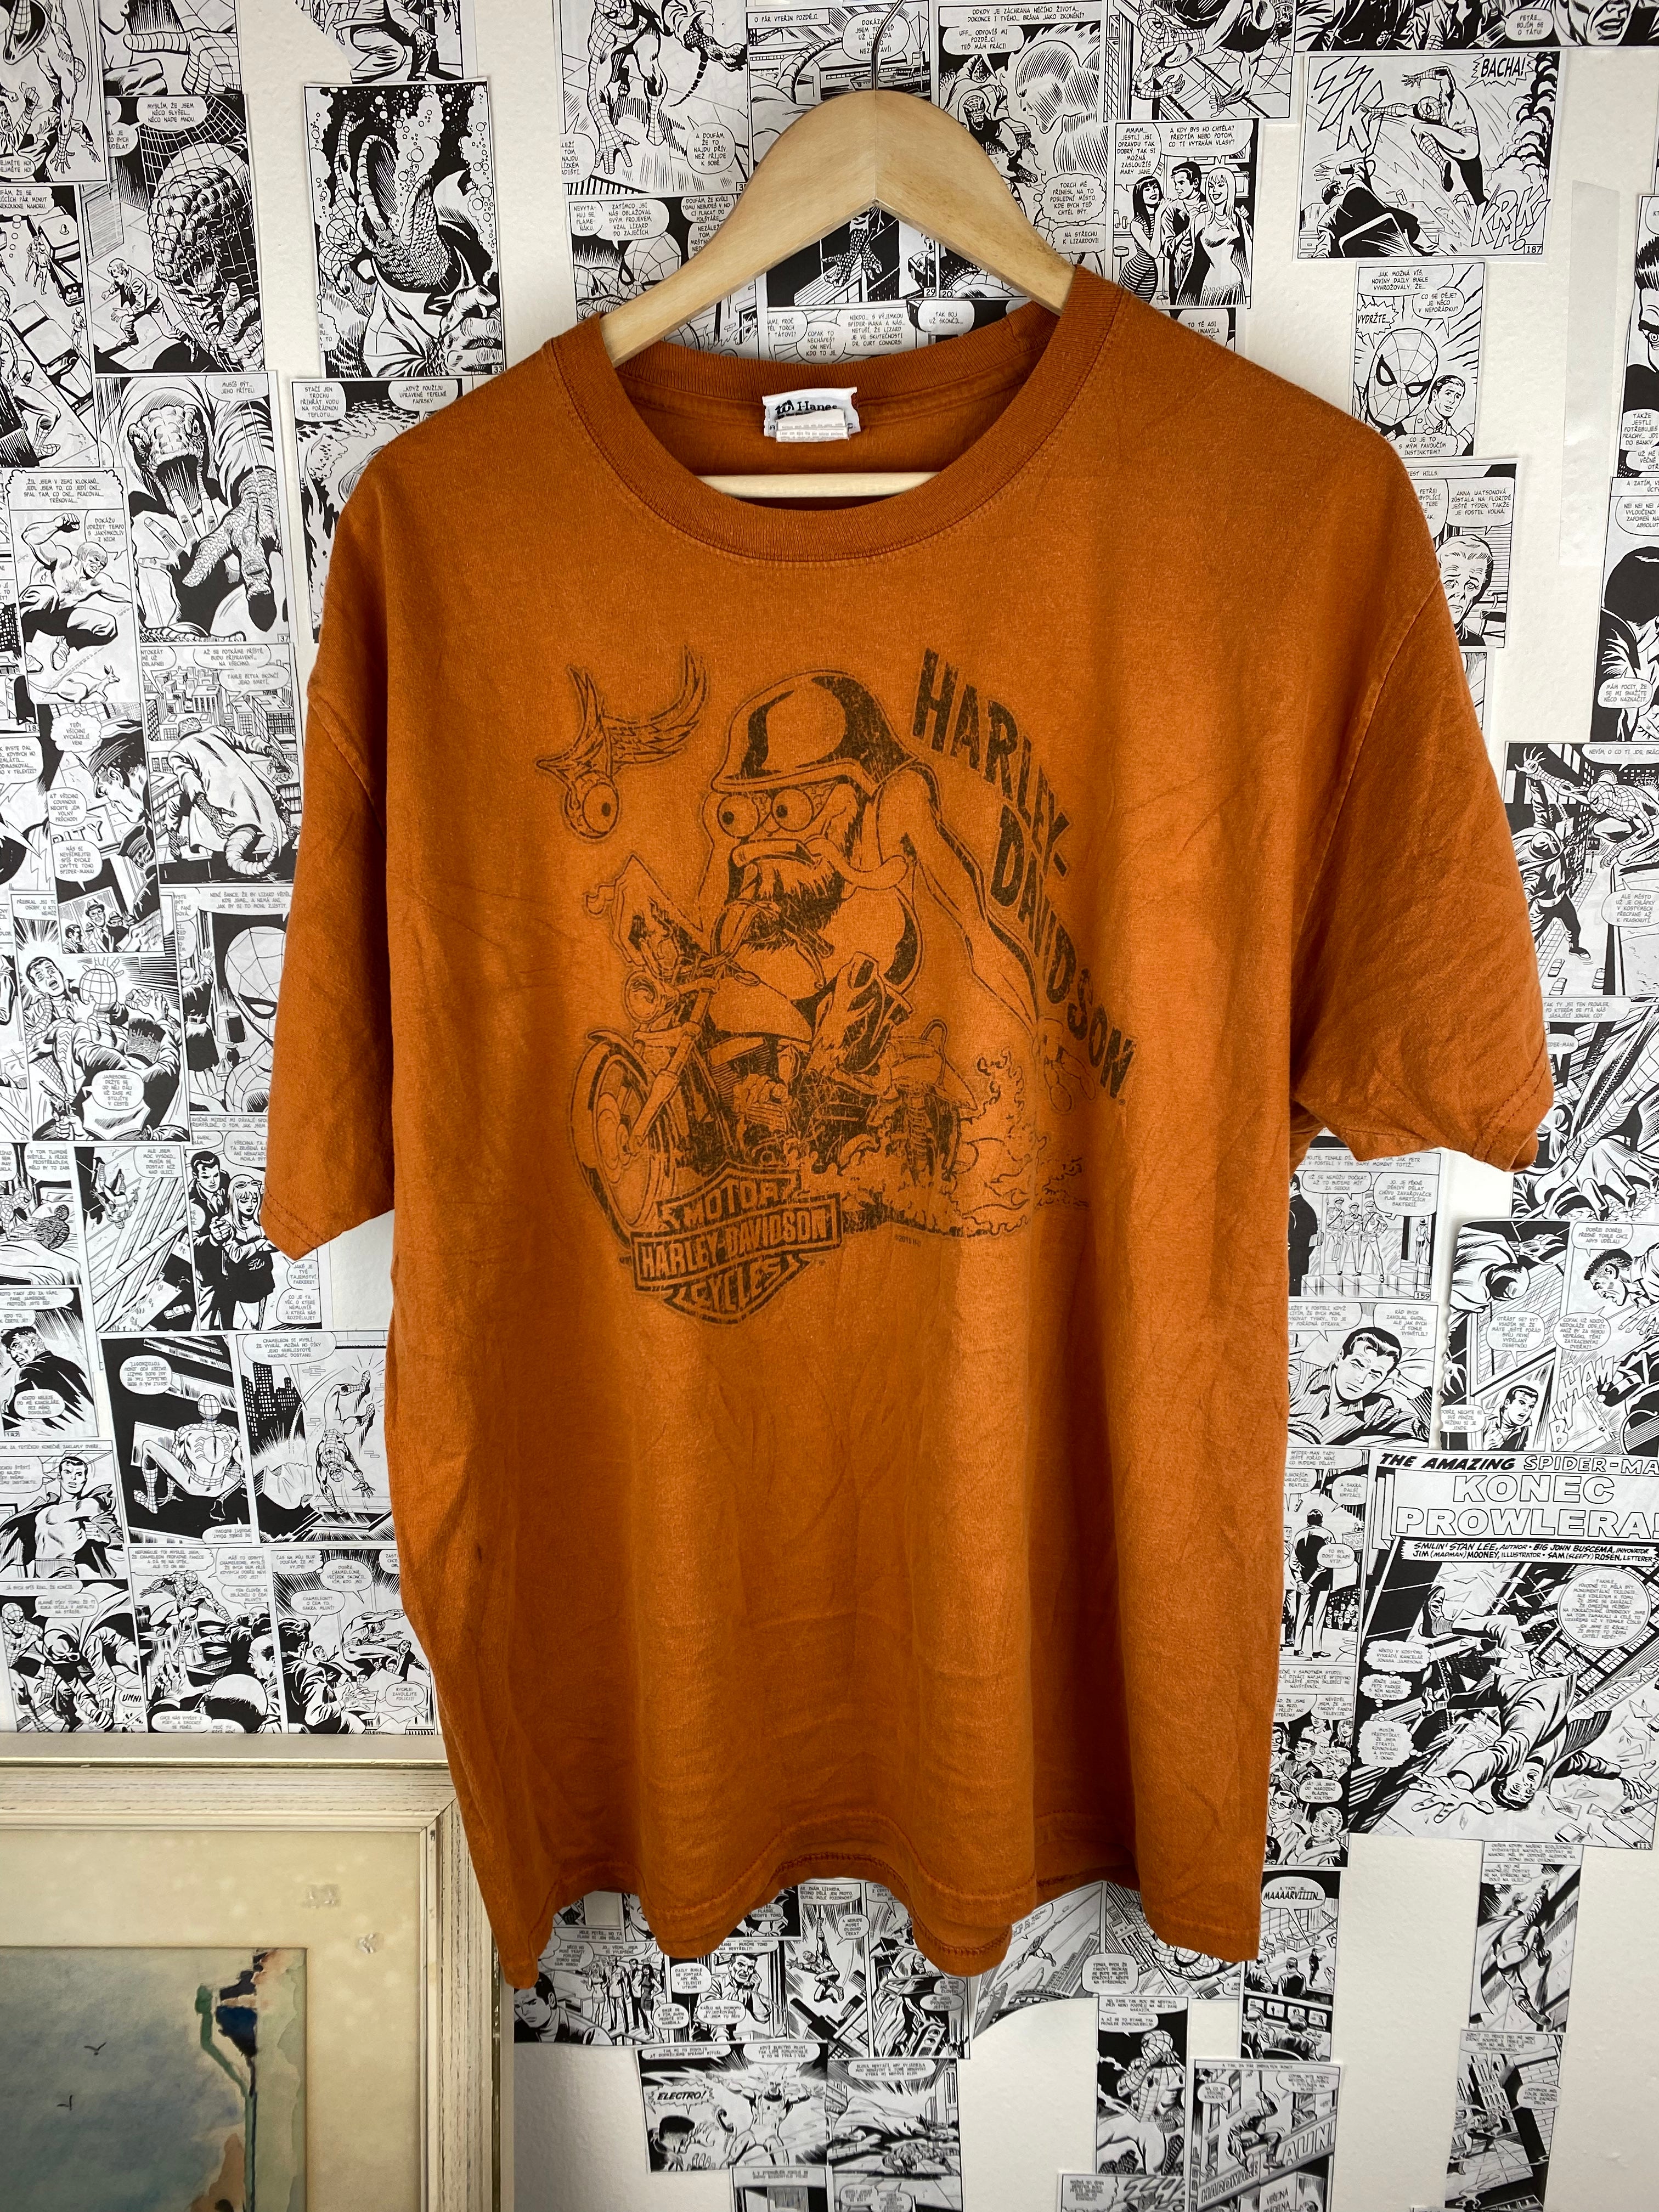 Vintage Harley Davidson - Ohio t-shirt - size XL